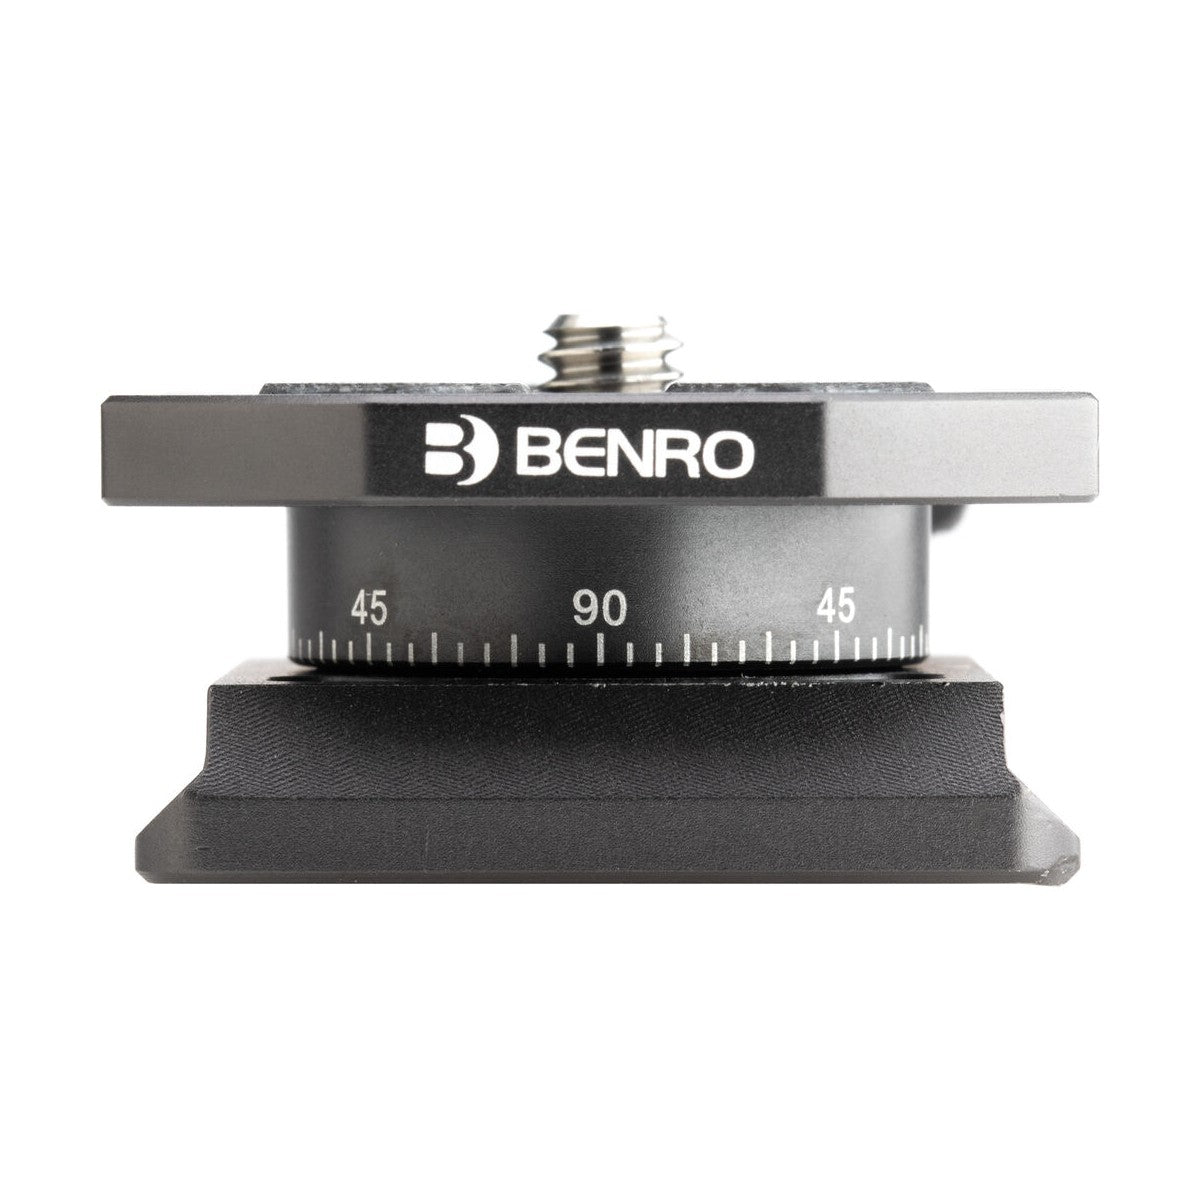 Benro ArcaSmart360 Rotating Adapter Plate